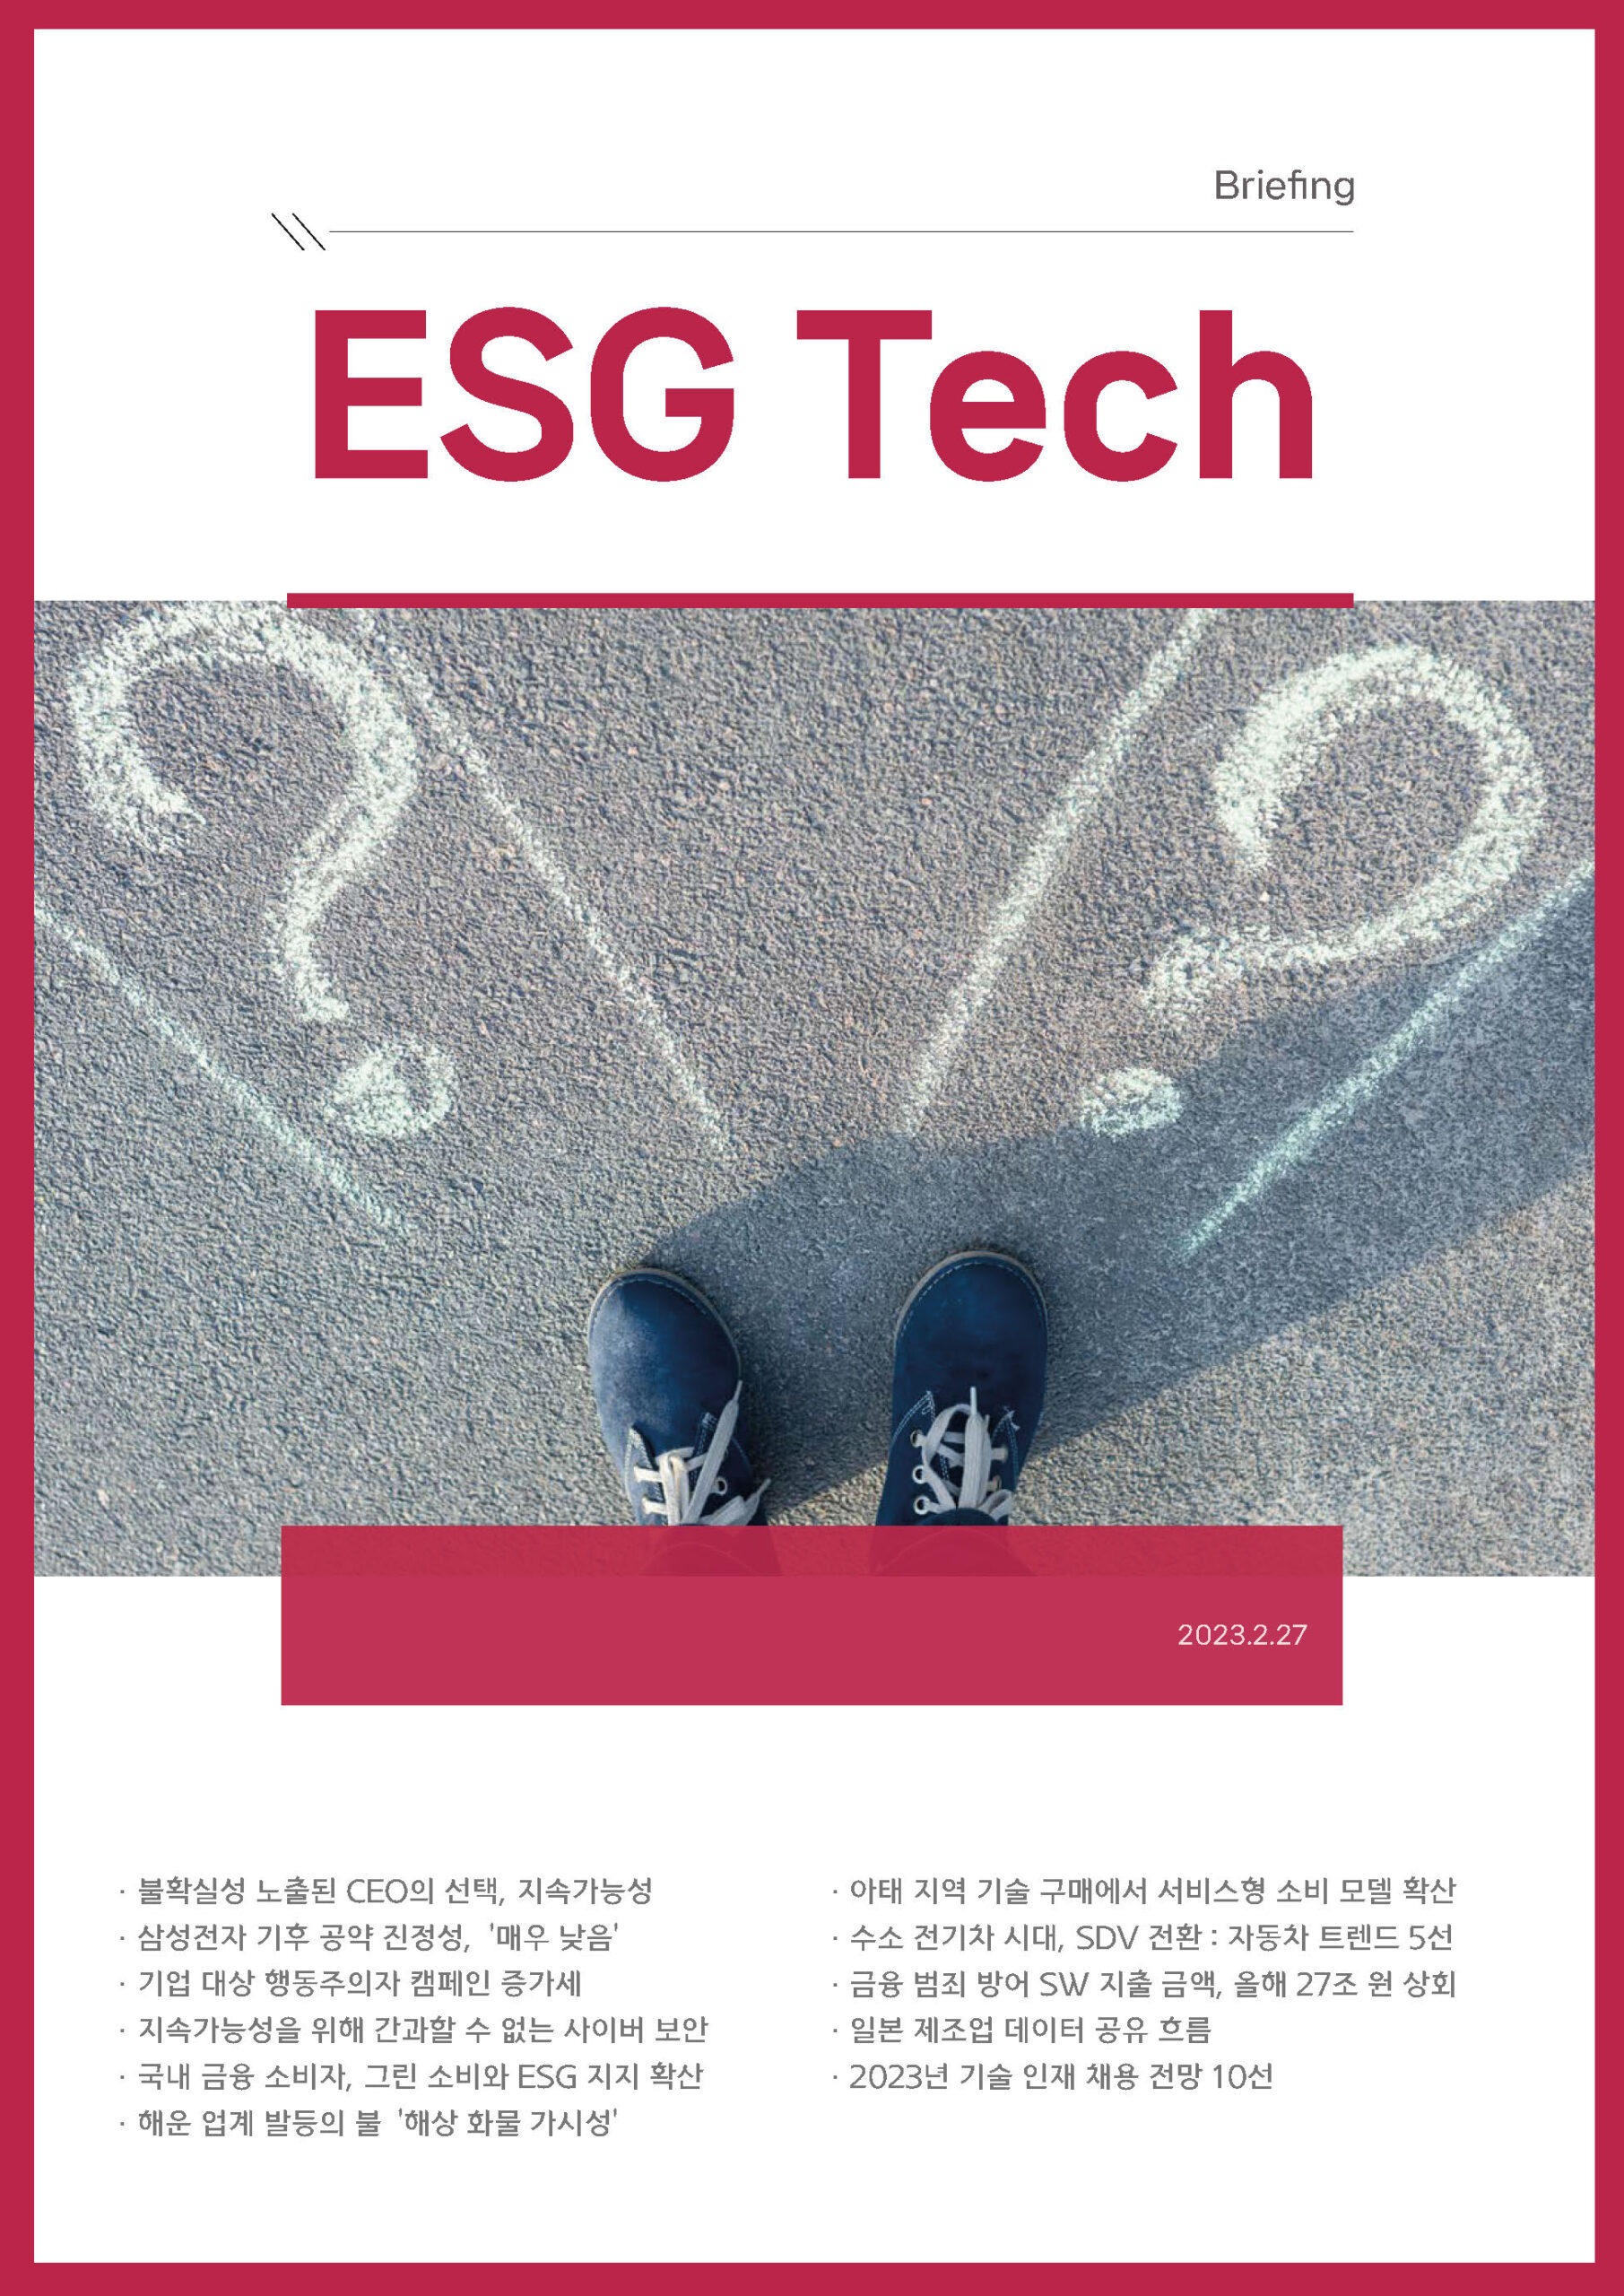 ESGTech_Briefing_2023_cover